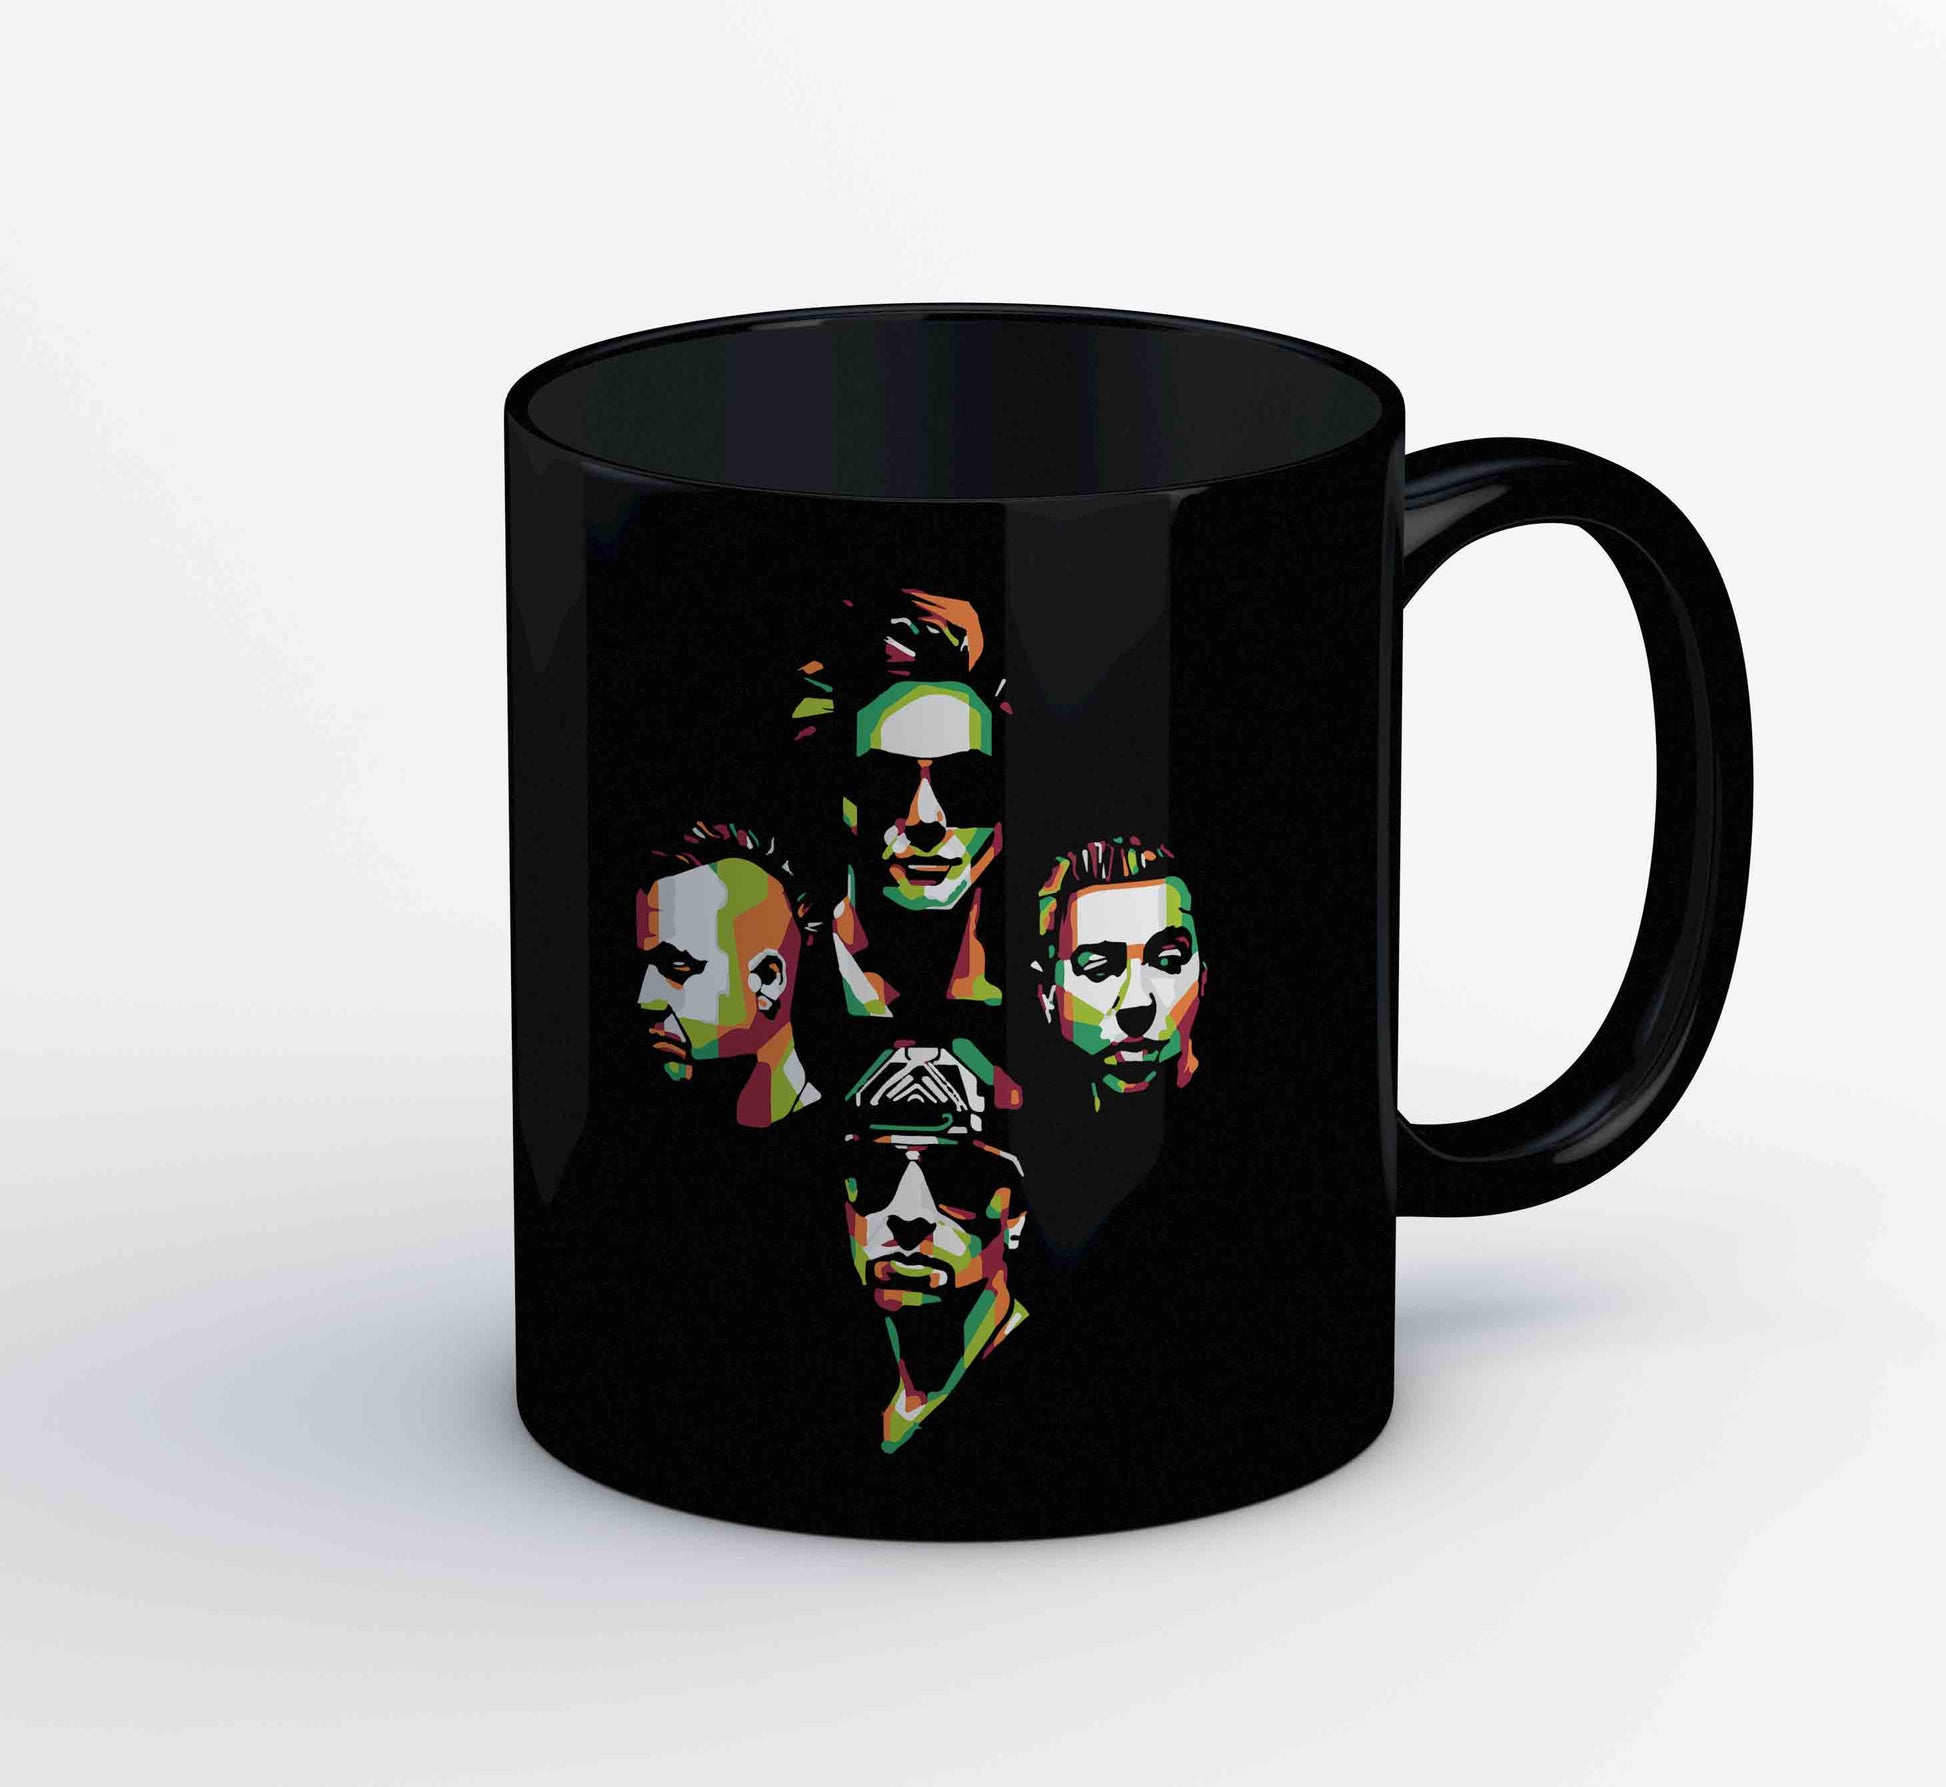 avenged sevenfold pop art mug coffee ceramic music band buy online india the banyan tee tbt men women girls boys unisex